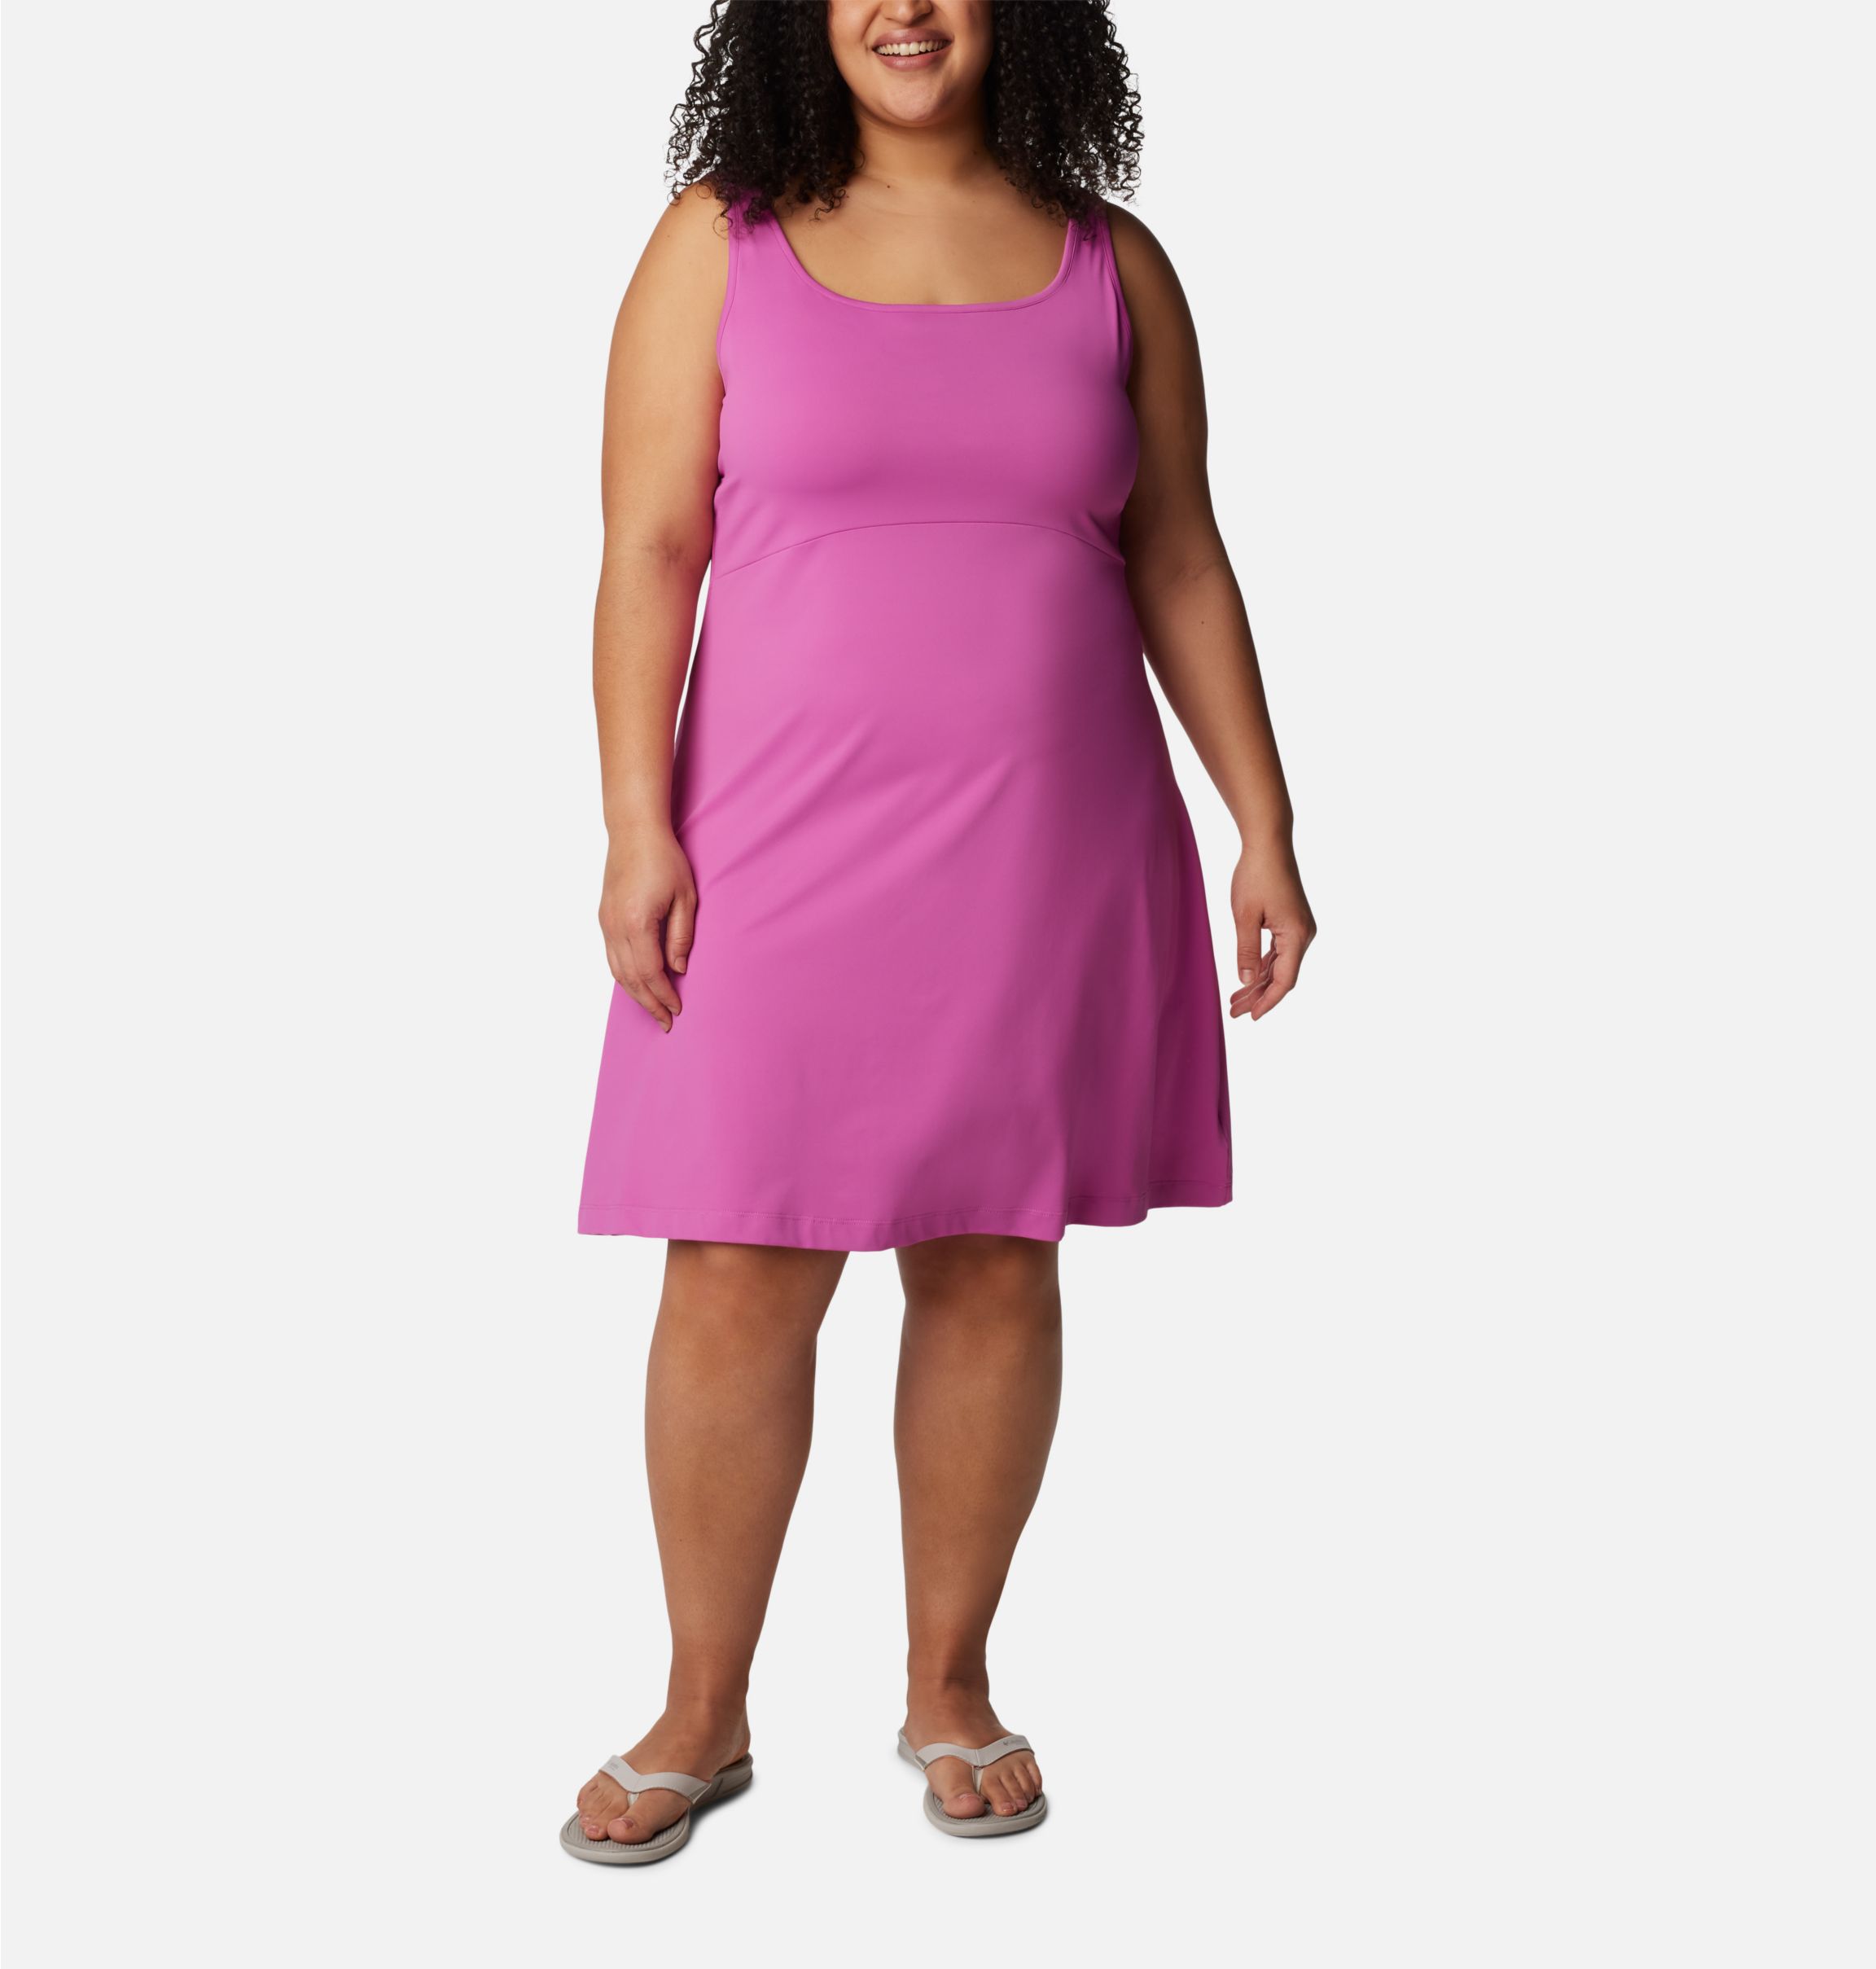 XL Bra 40 Cup Vest Dress Plus Size Sportswear Women Stomach